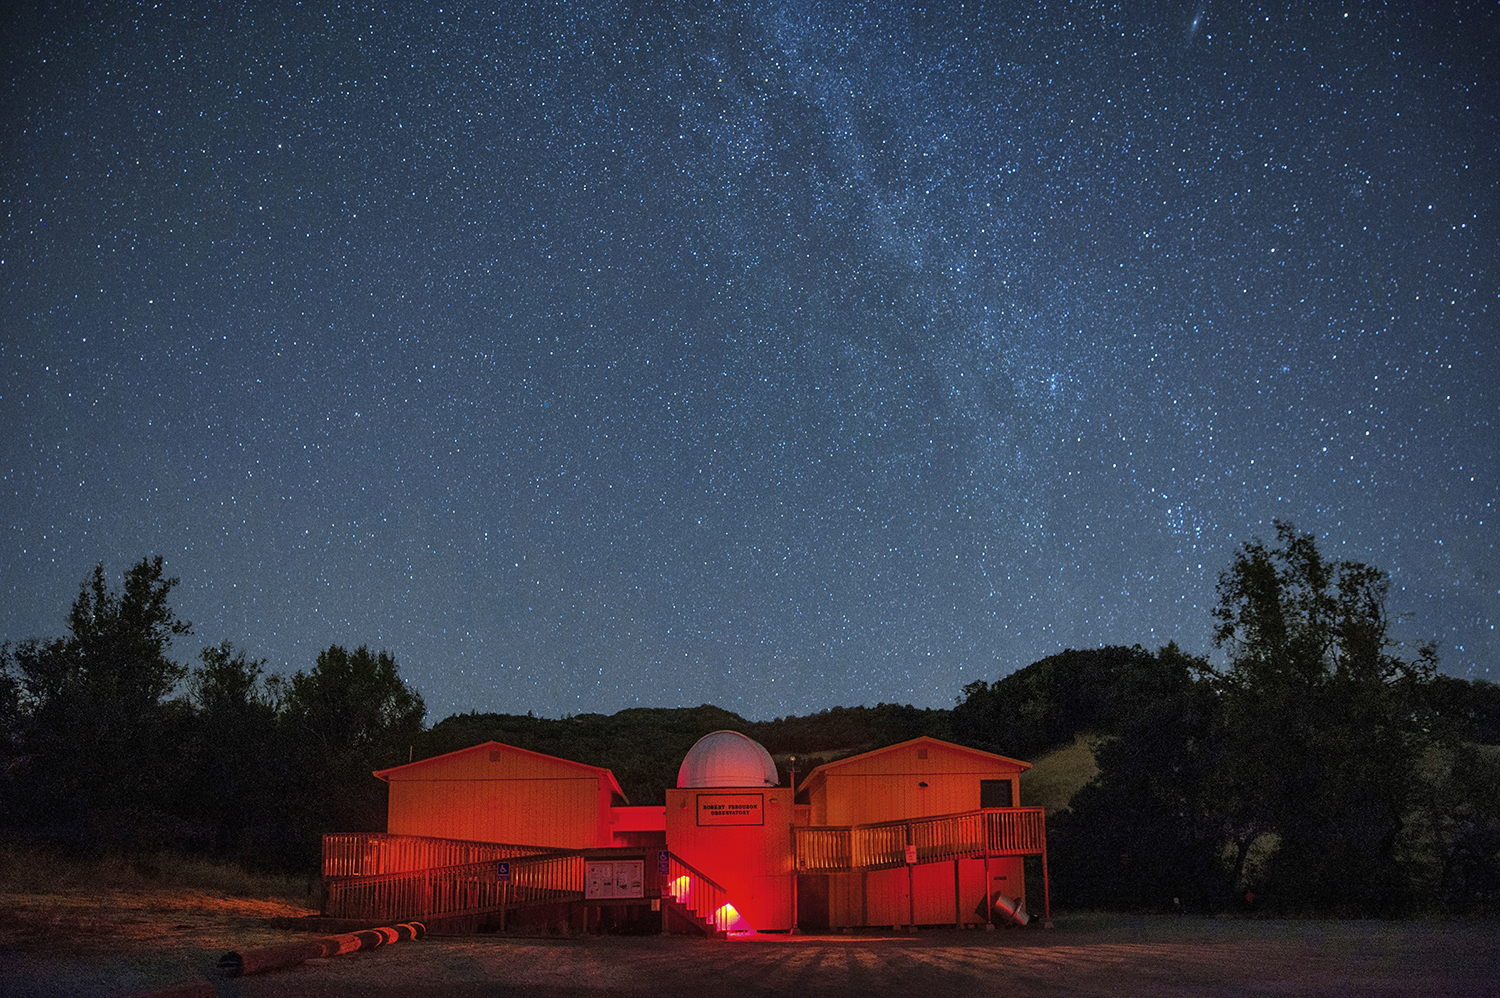 Robert Ferguson Observatory with starlight sky in background.